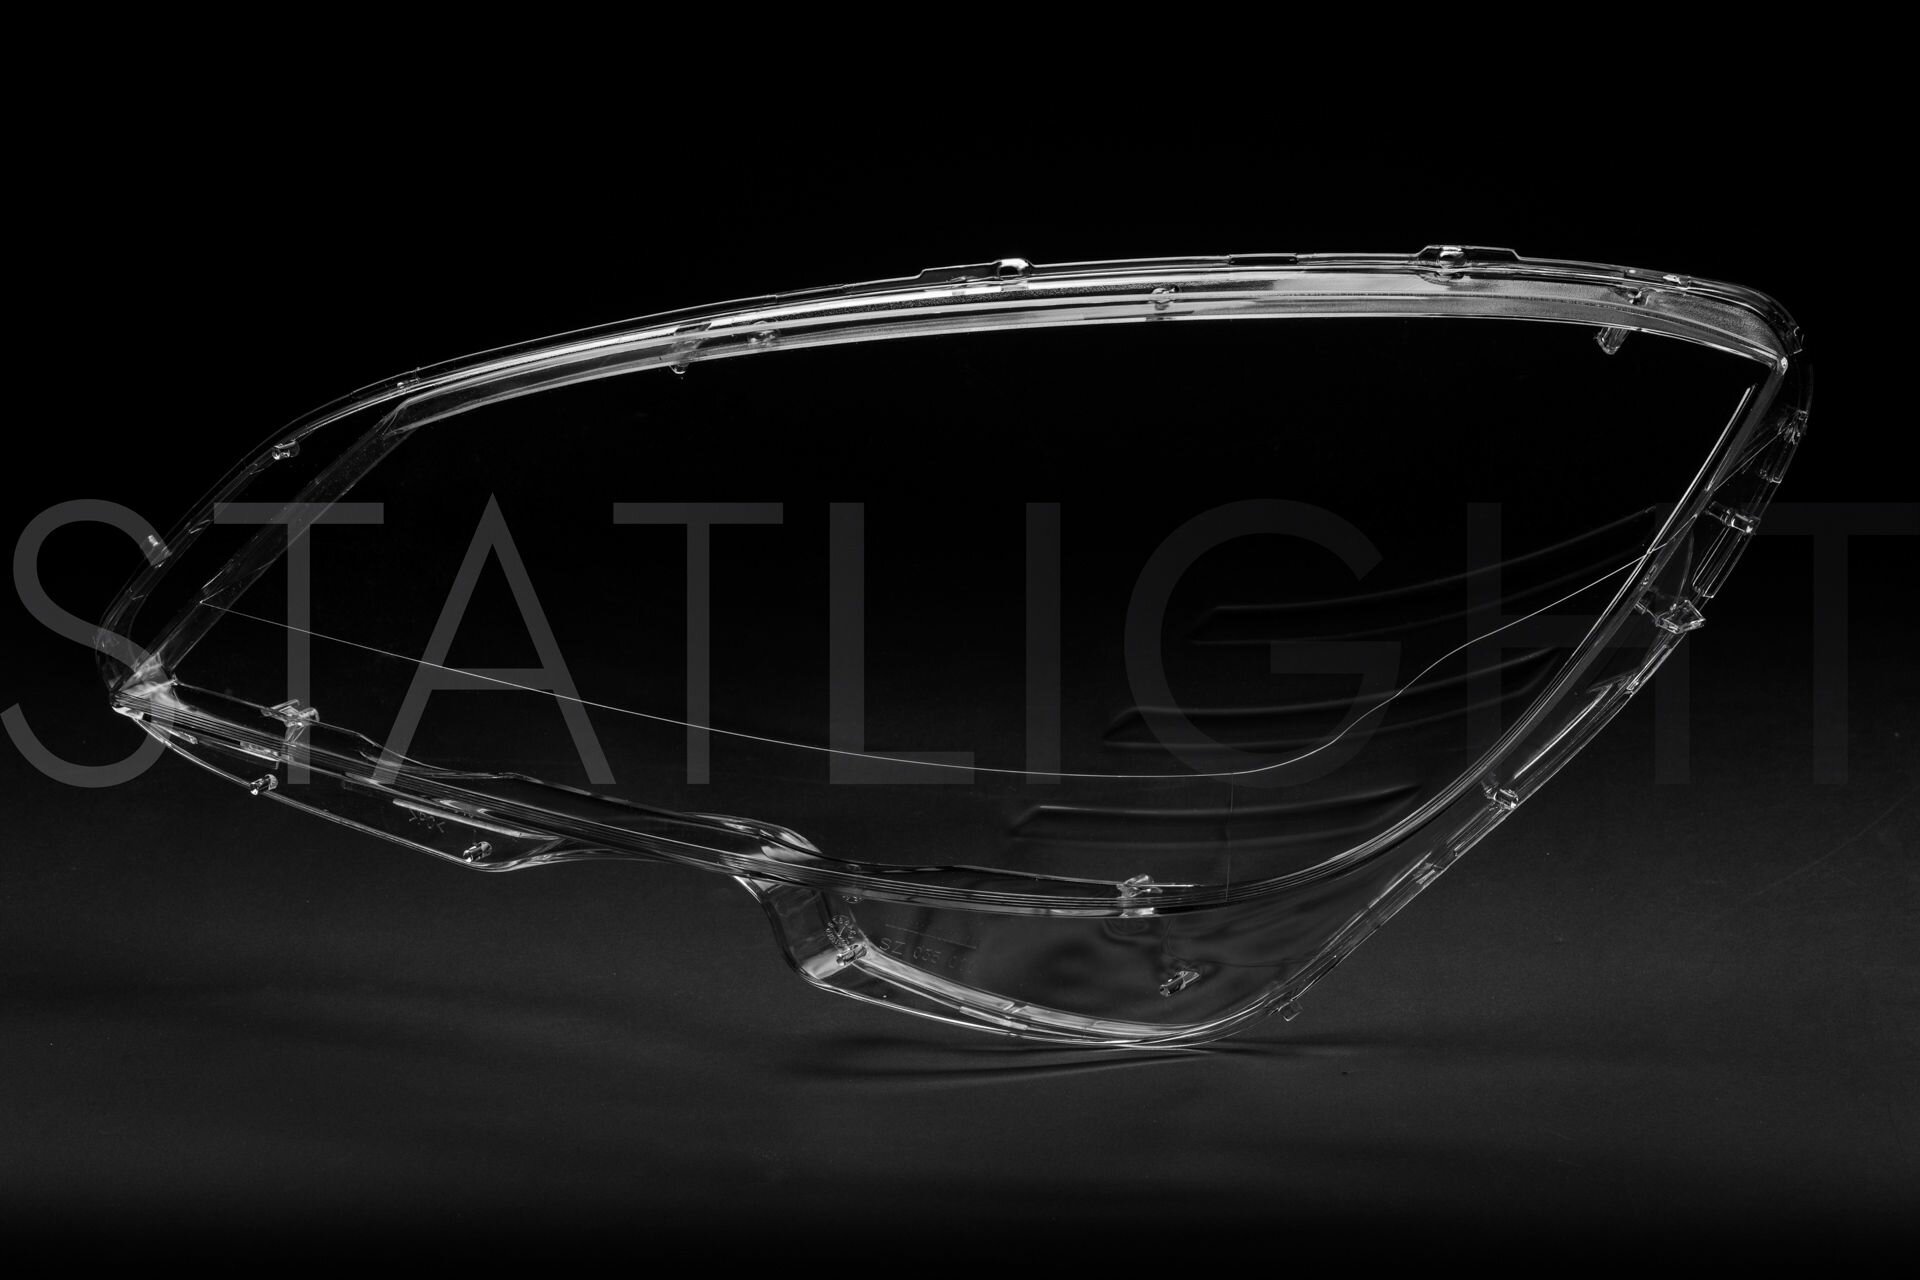 Комплект стекол фар для автомобиля Mercedes W204 C200 2007-2011 гг.